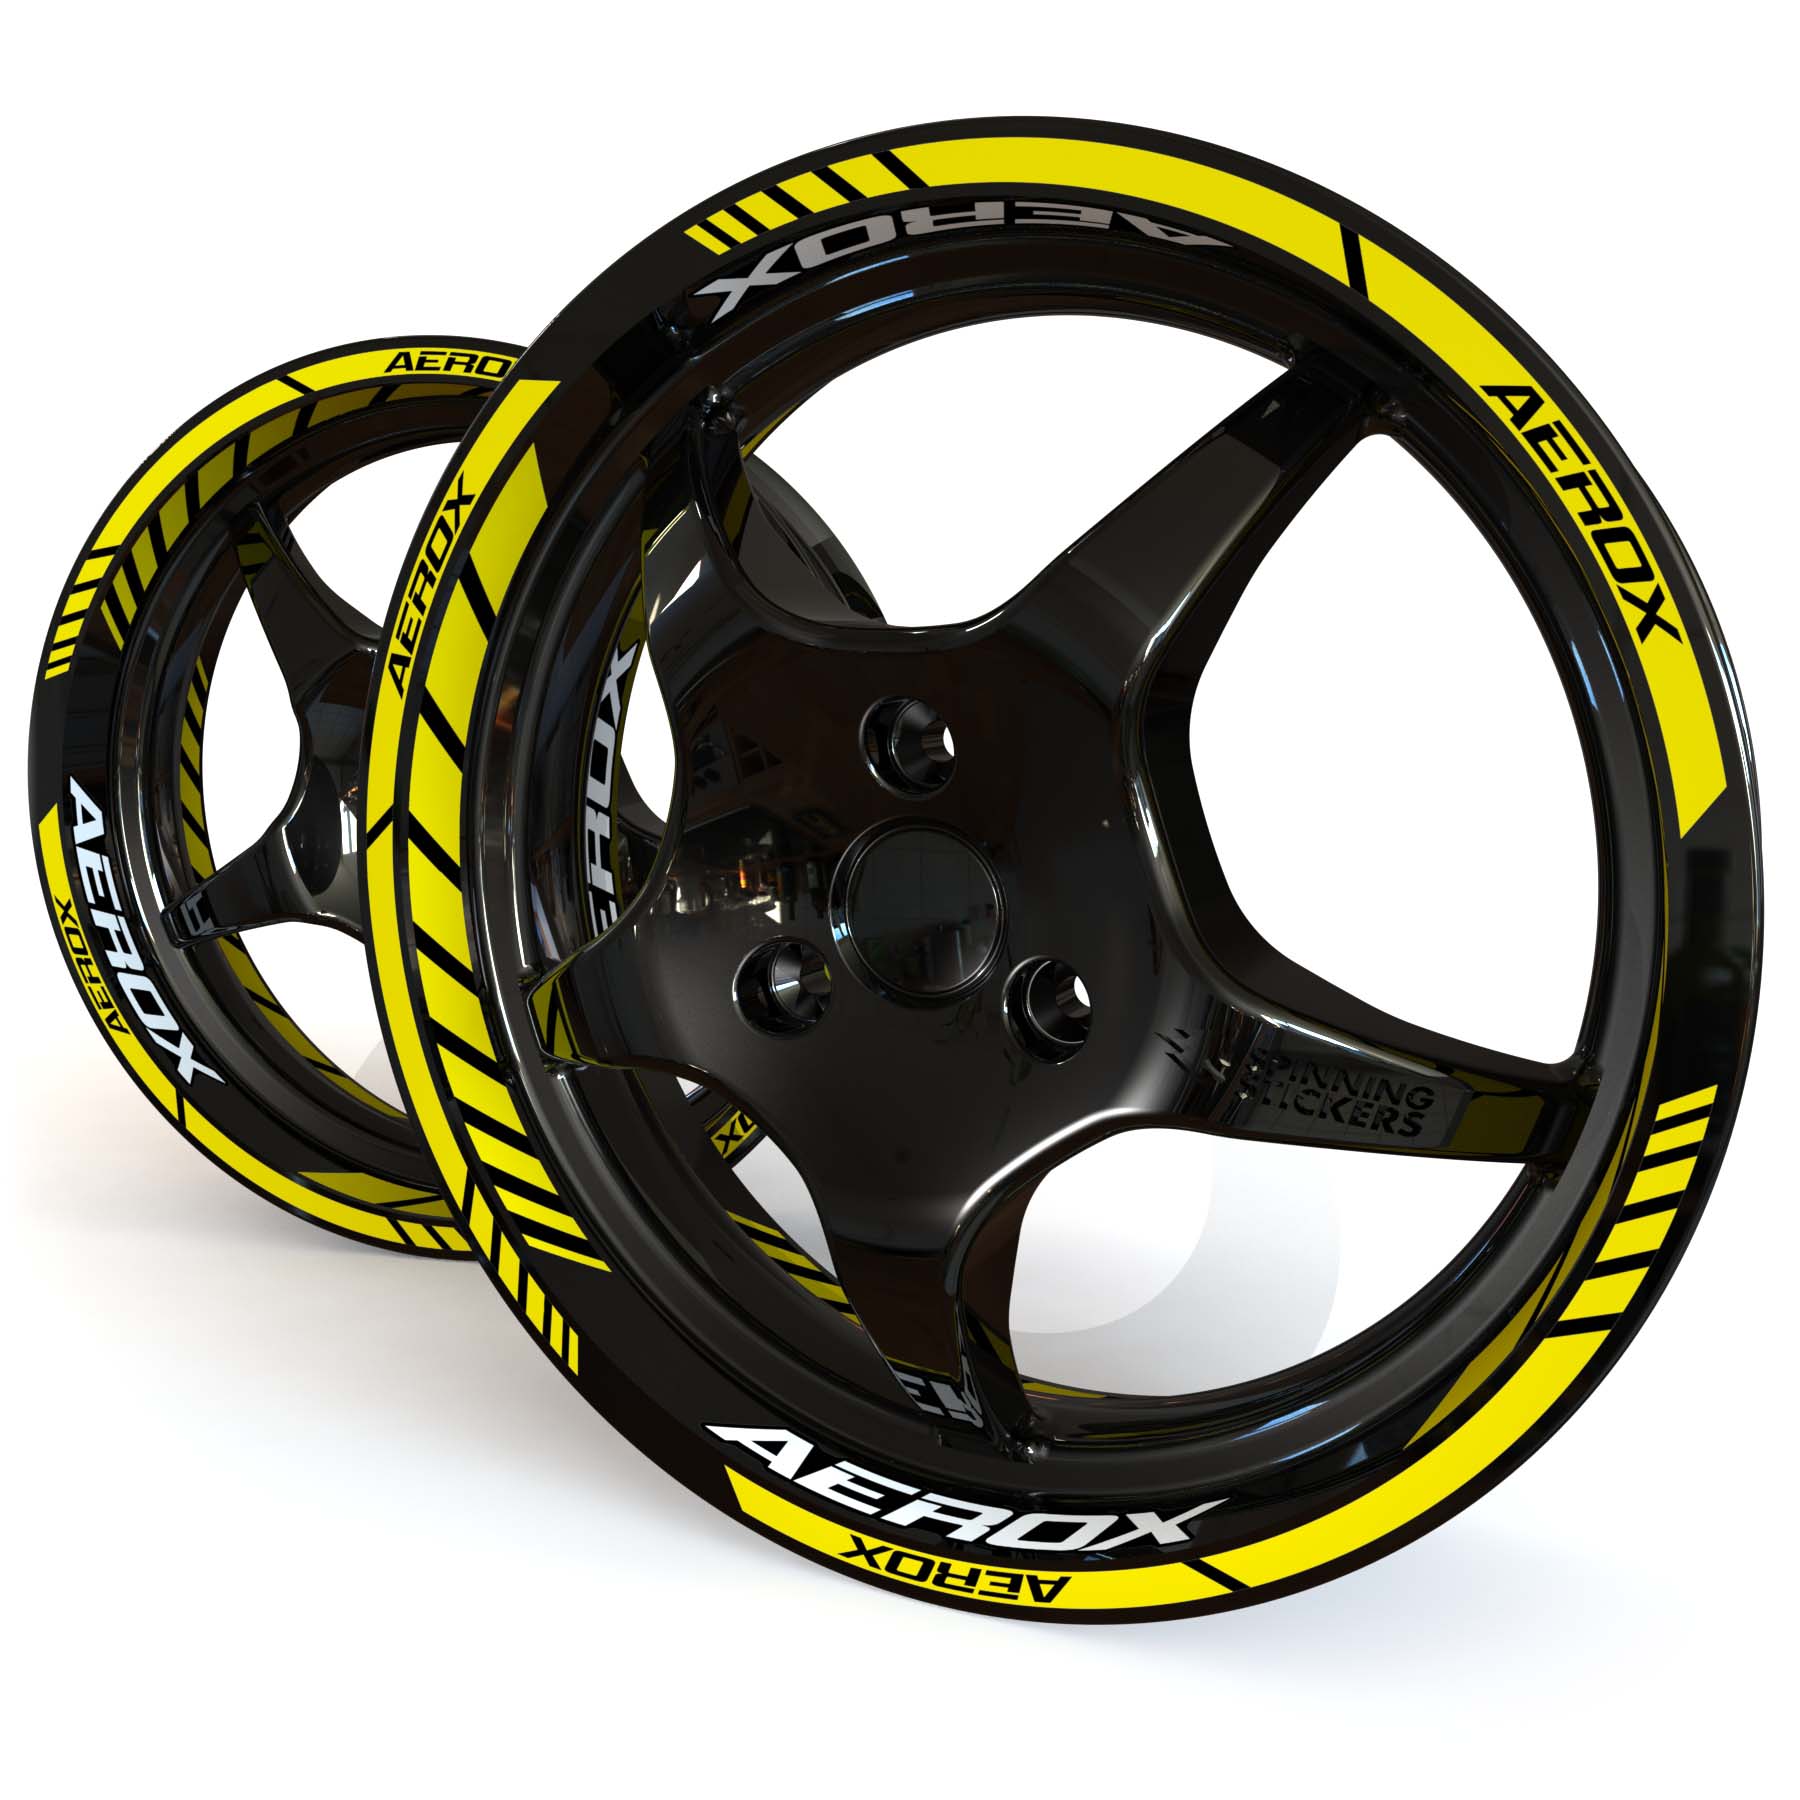 Yellow and white Yamaha Aerox wheel stickers on a black 12 inch moped rim